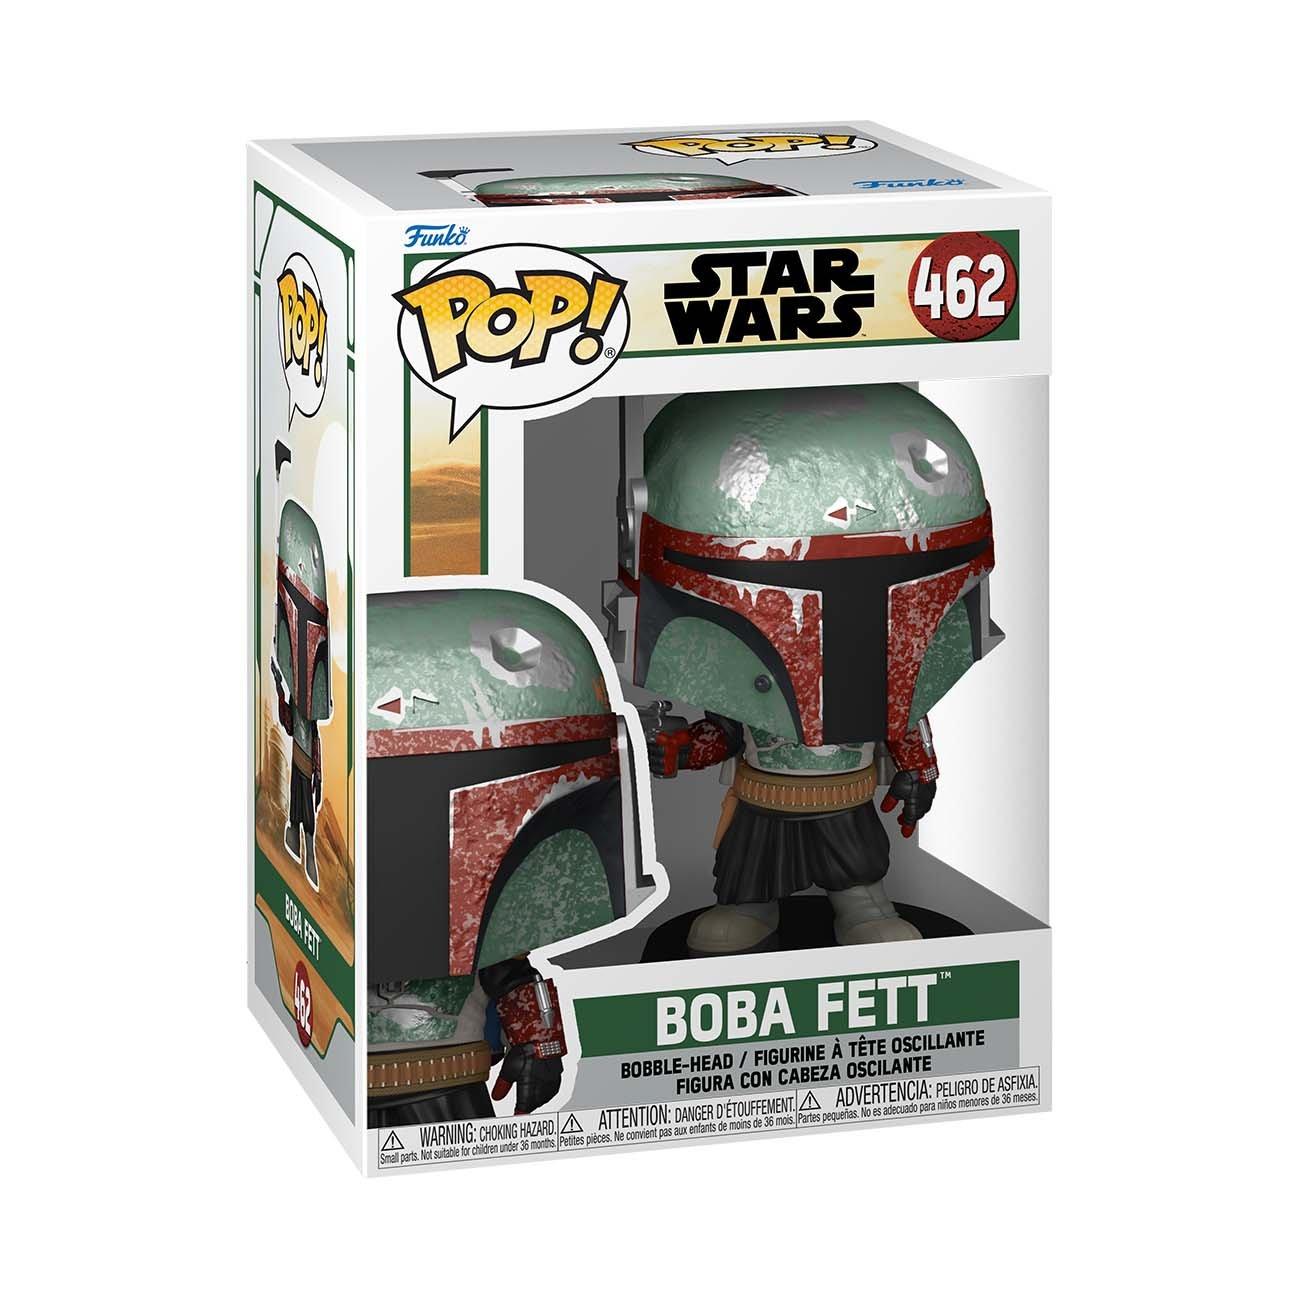 Funko Pop! Mug: Star Wars - 2pk Boba Fett